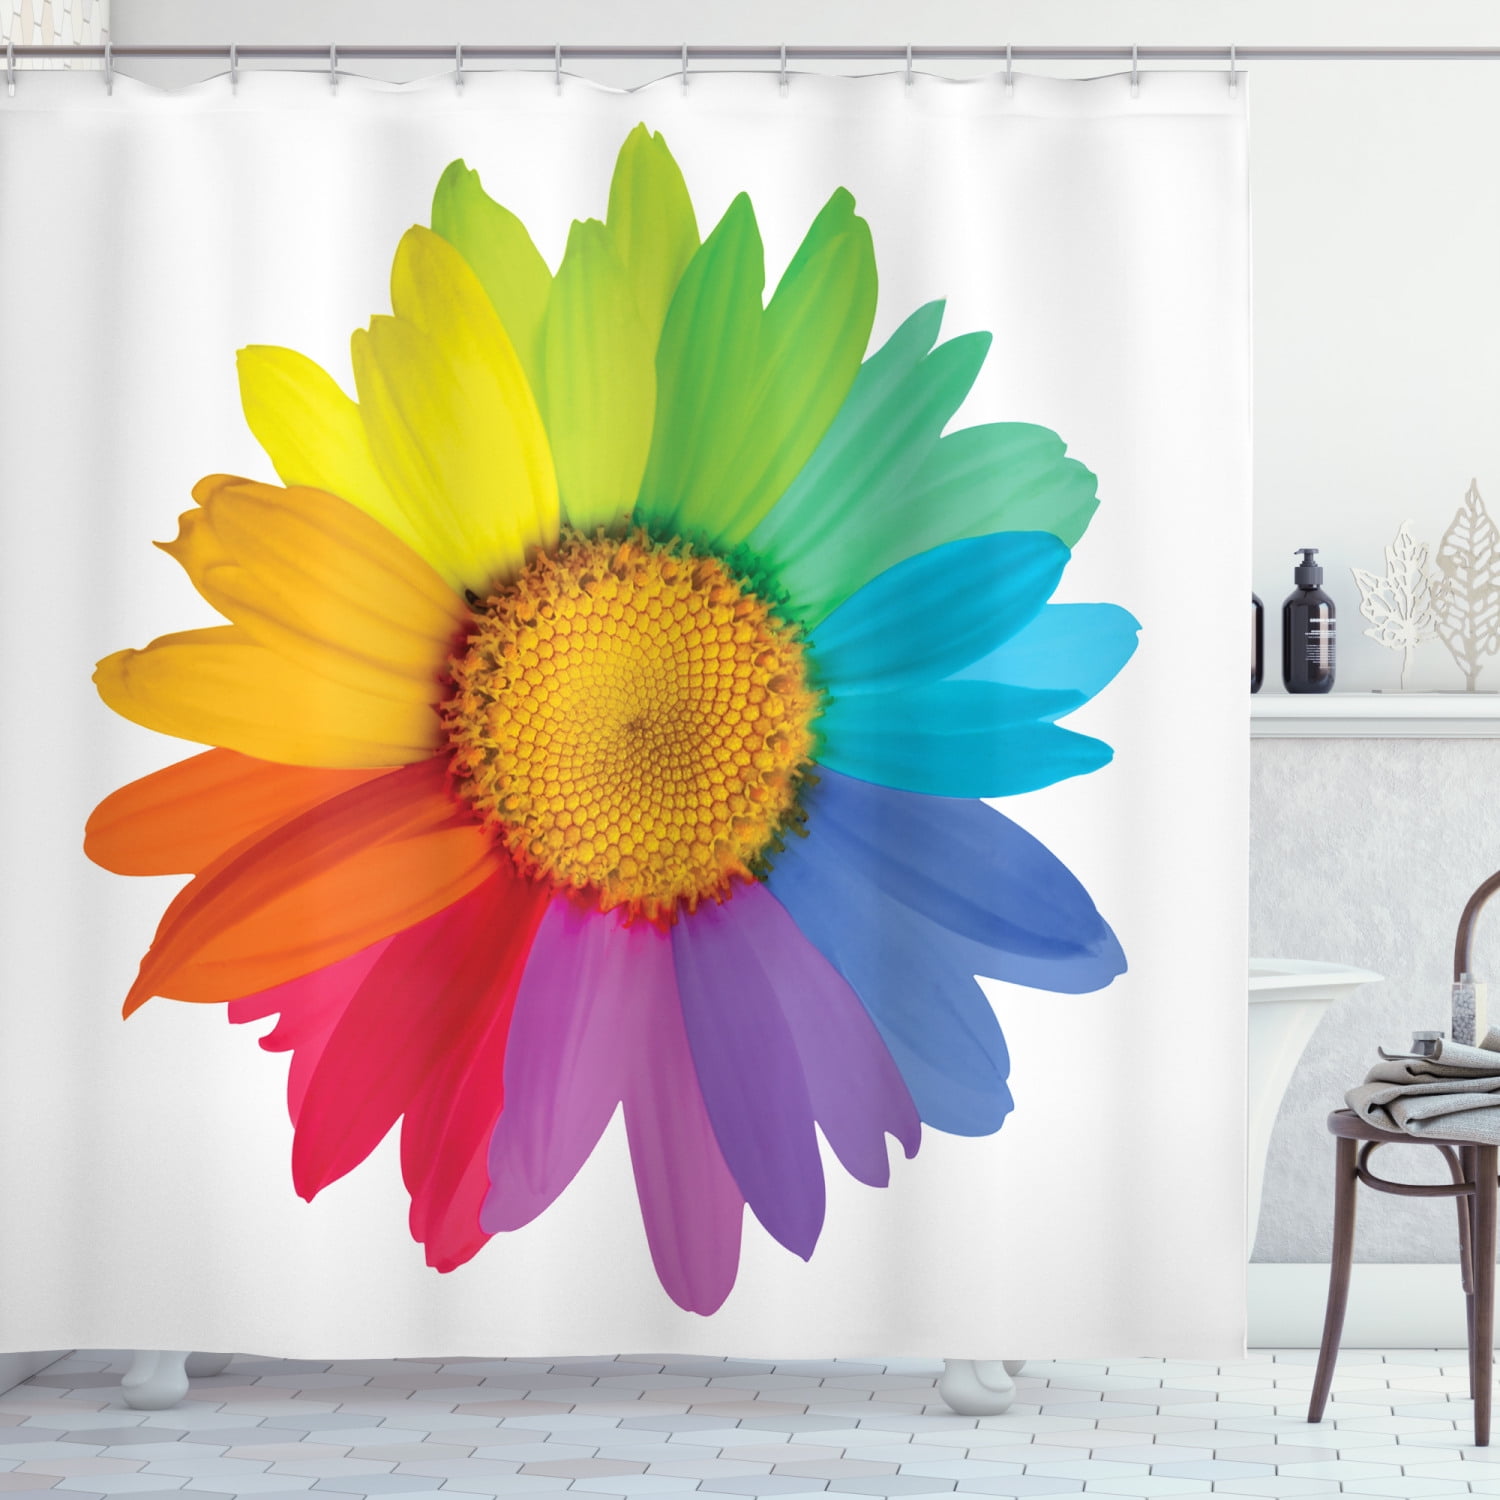 Spring Flowers and Wood Floor Bokeh Background Shower Curtain Set Bathroom Decor 